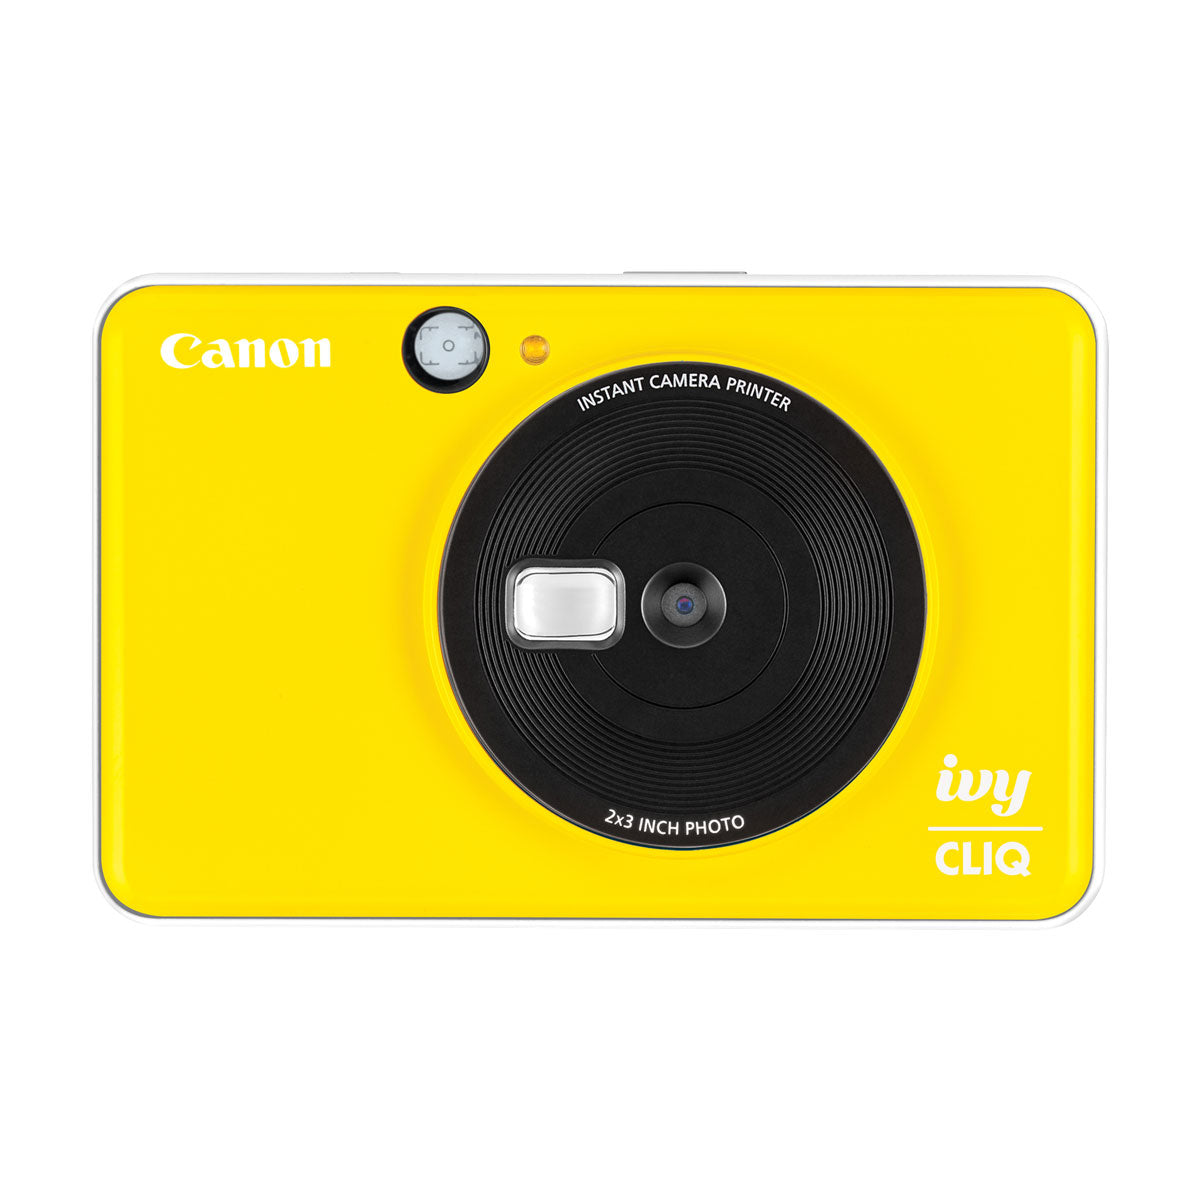 Canon IVY Cliq Instant Camera Printer (Bumble Bee Yellow)